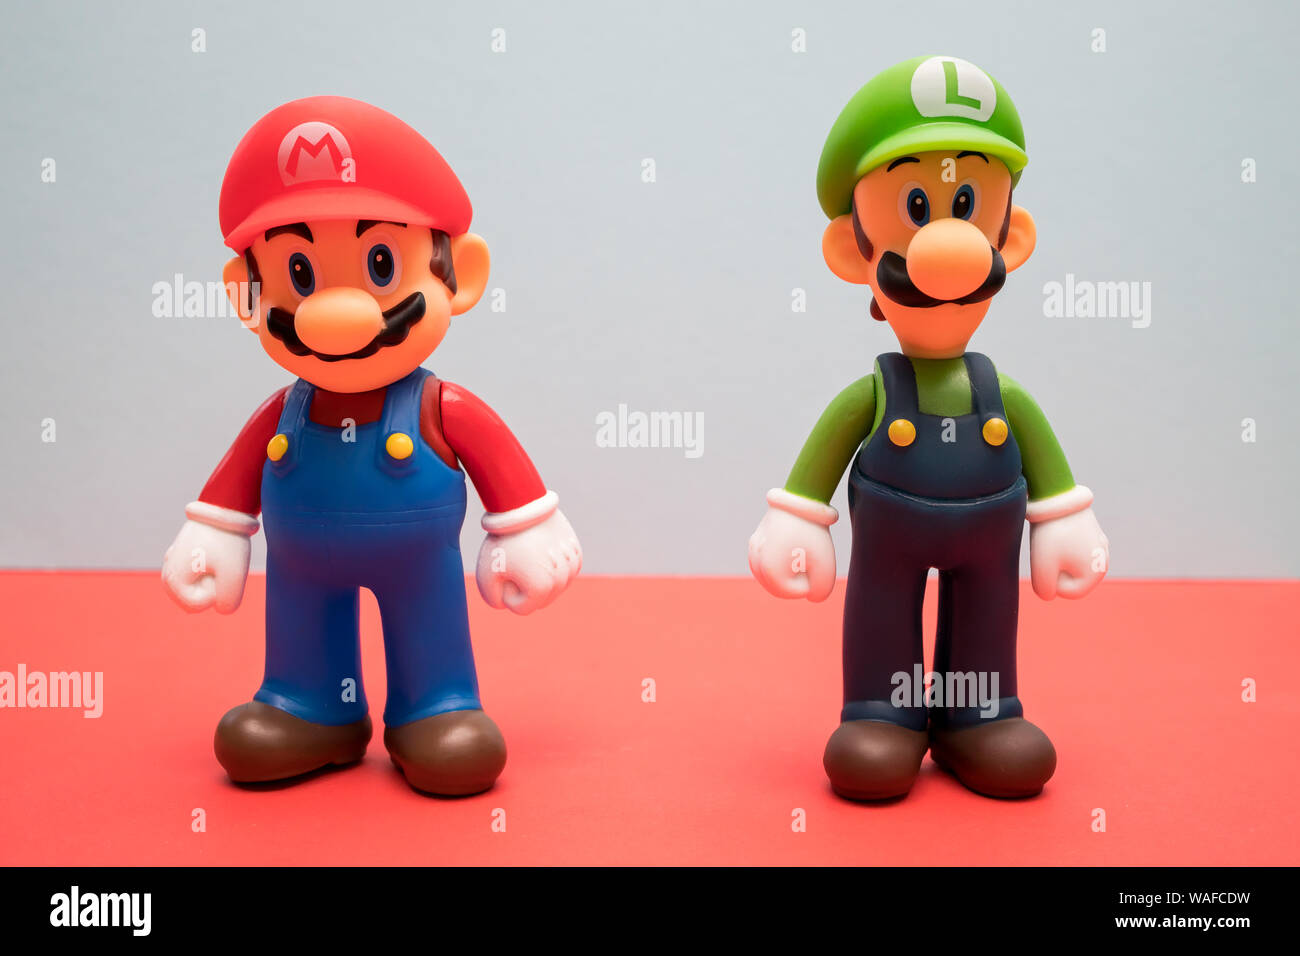 Mario luigi -Fotos und -Bildmaterial in hoher Auflösung – Alamy